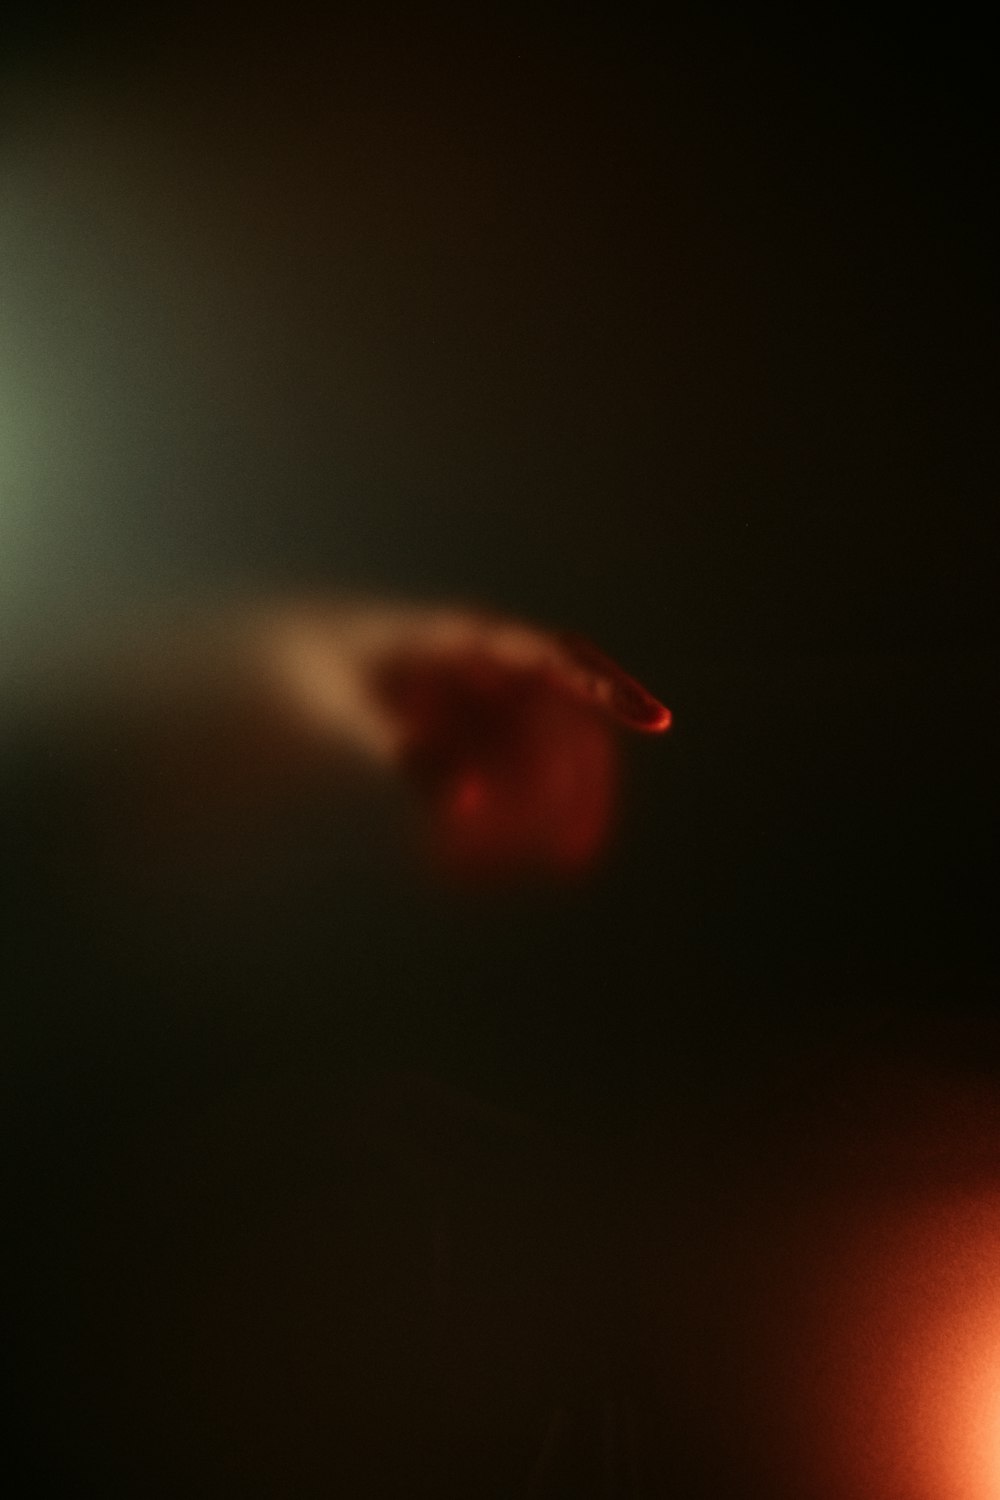 una imagen borrosa de un objeto rojo en la oscuridad